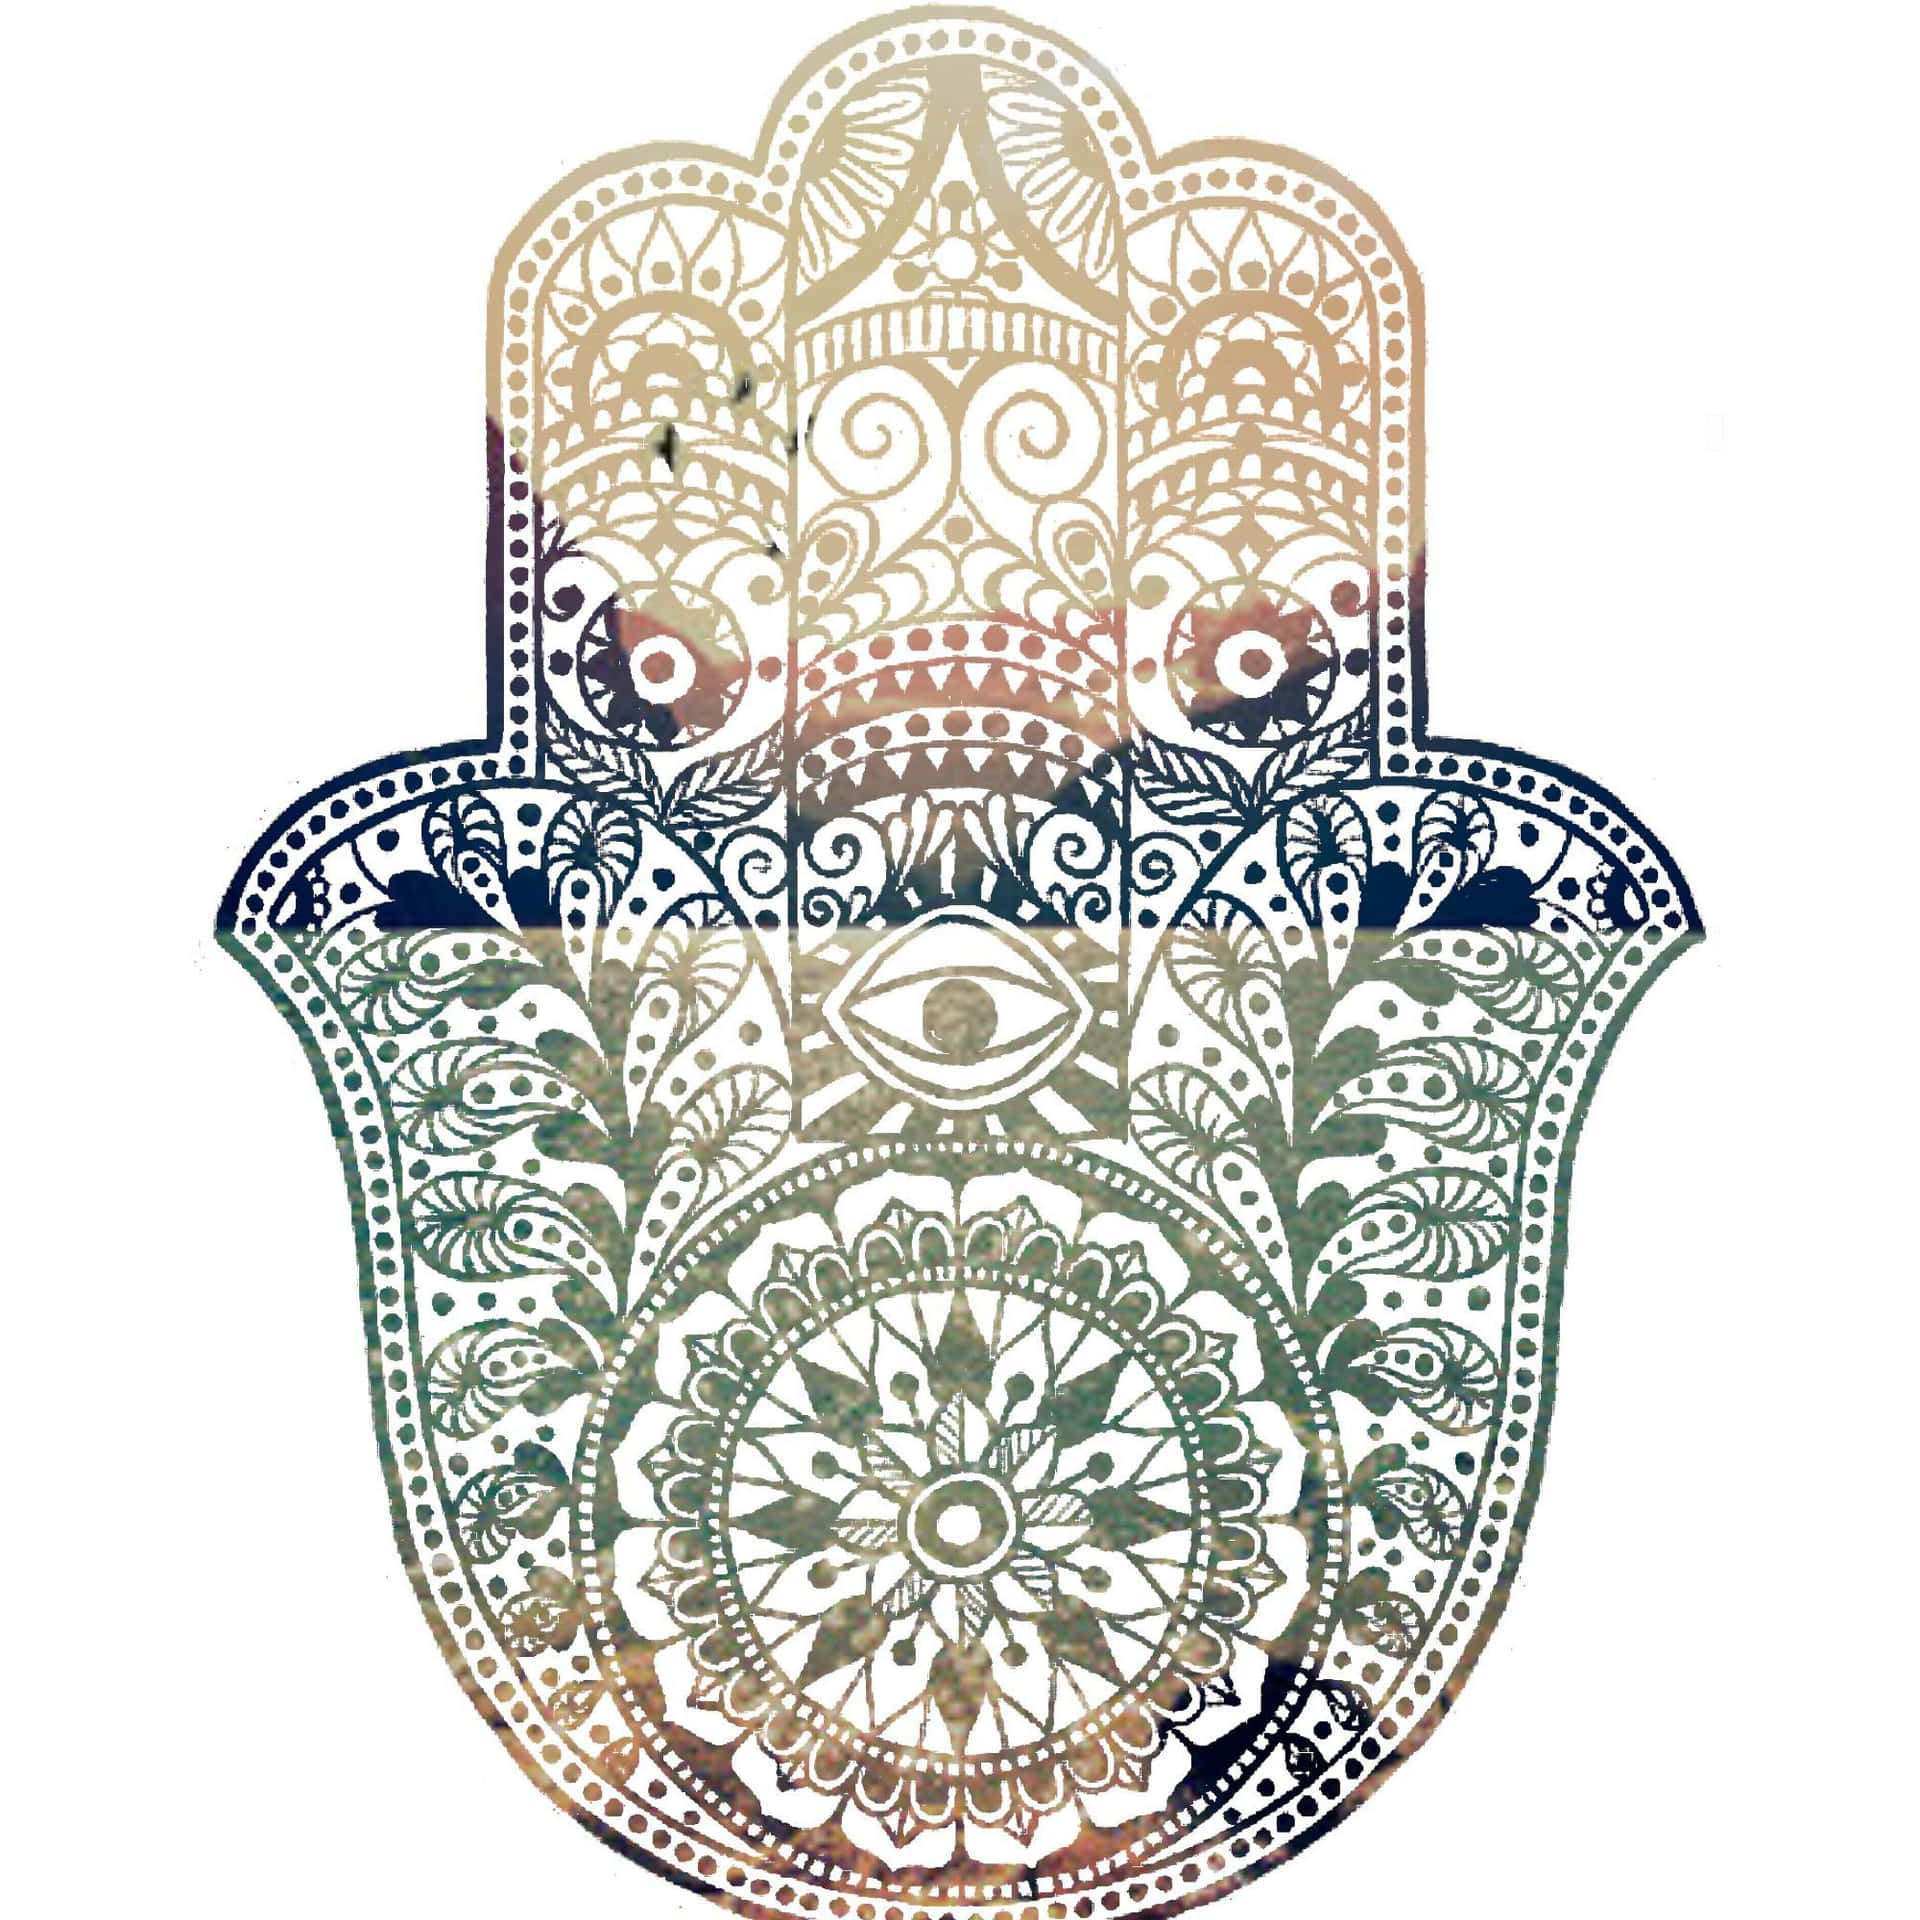 Spiritual Hamsa Hand Symbol with Galaxy Background Wallpaper